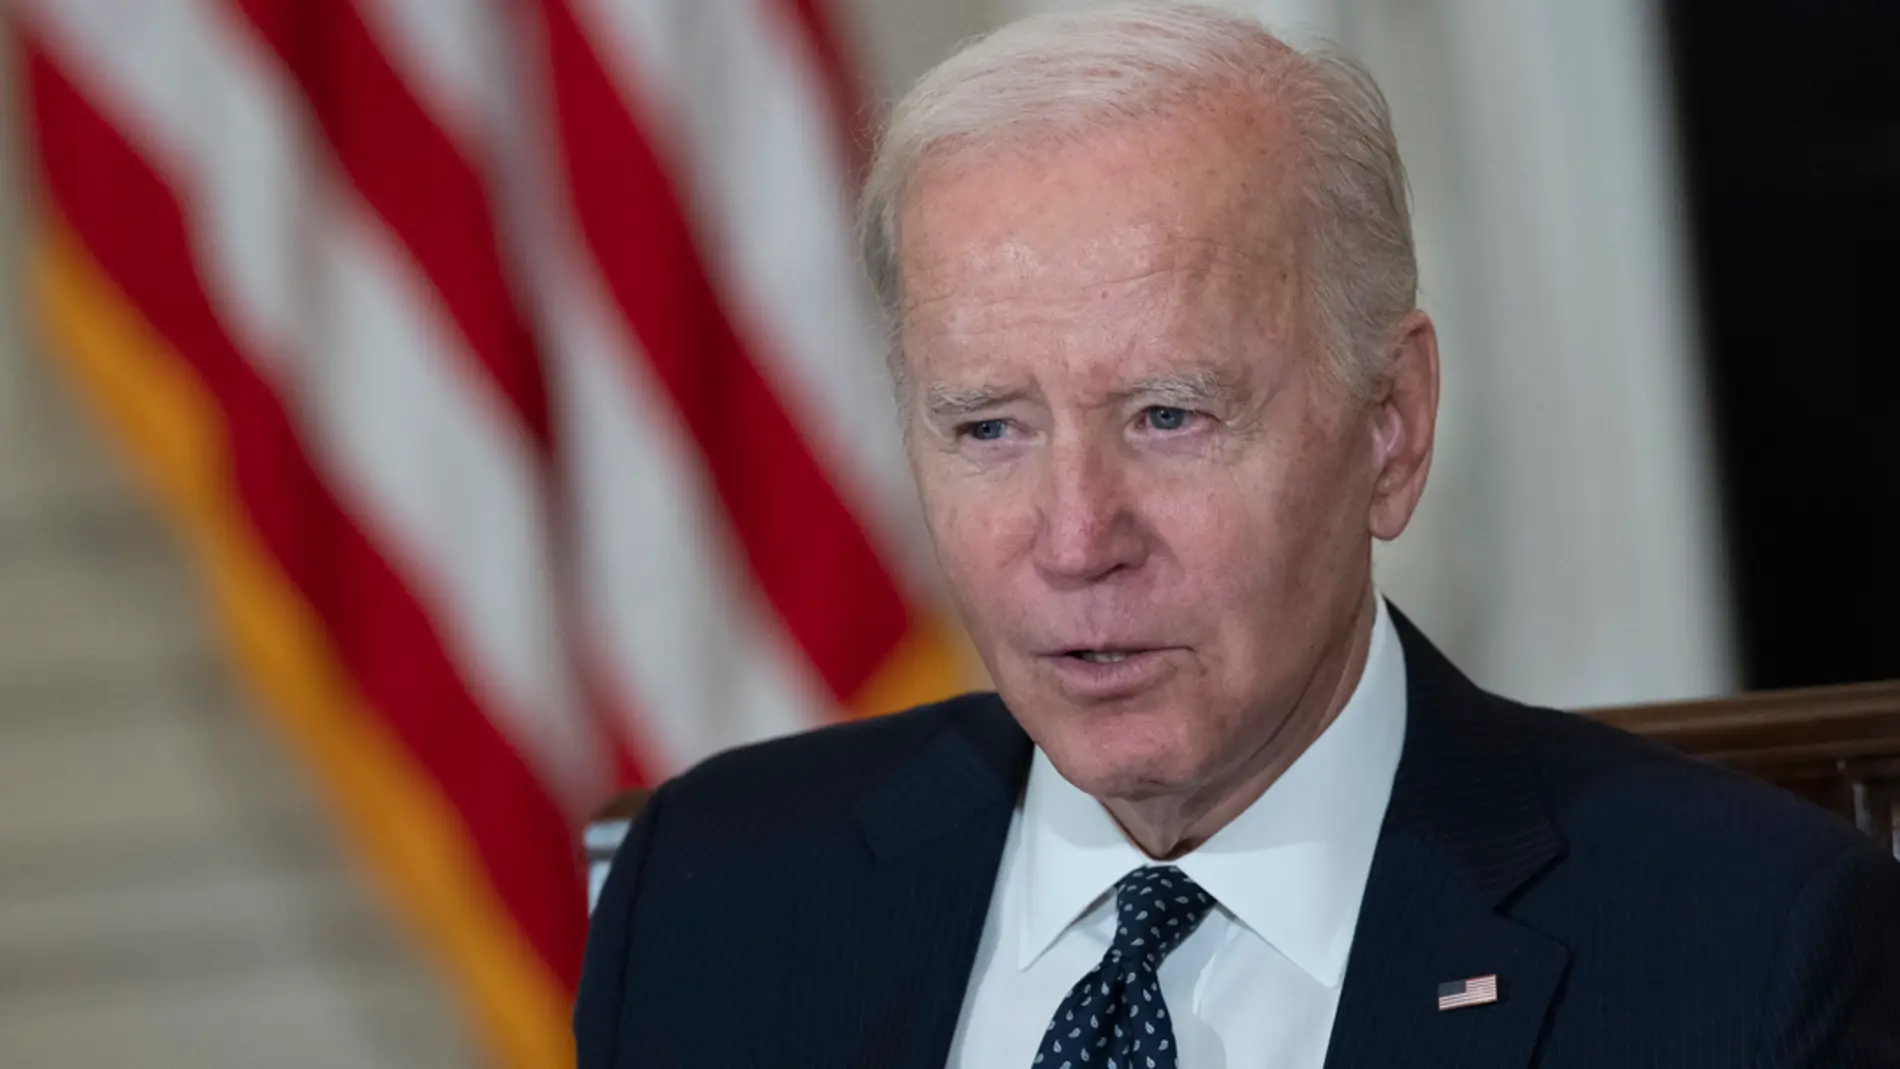 Biden vincula el ataque al marido de Nancy Pelosi a las "mentiras" del Partido Republicano